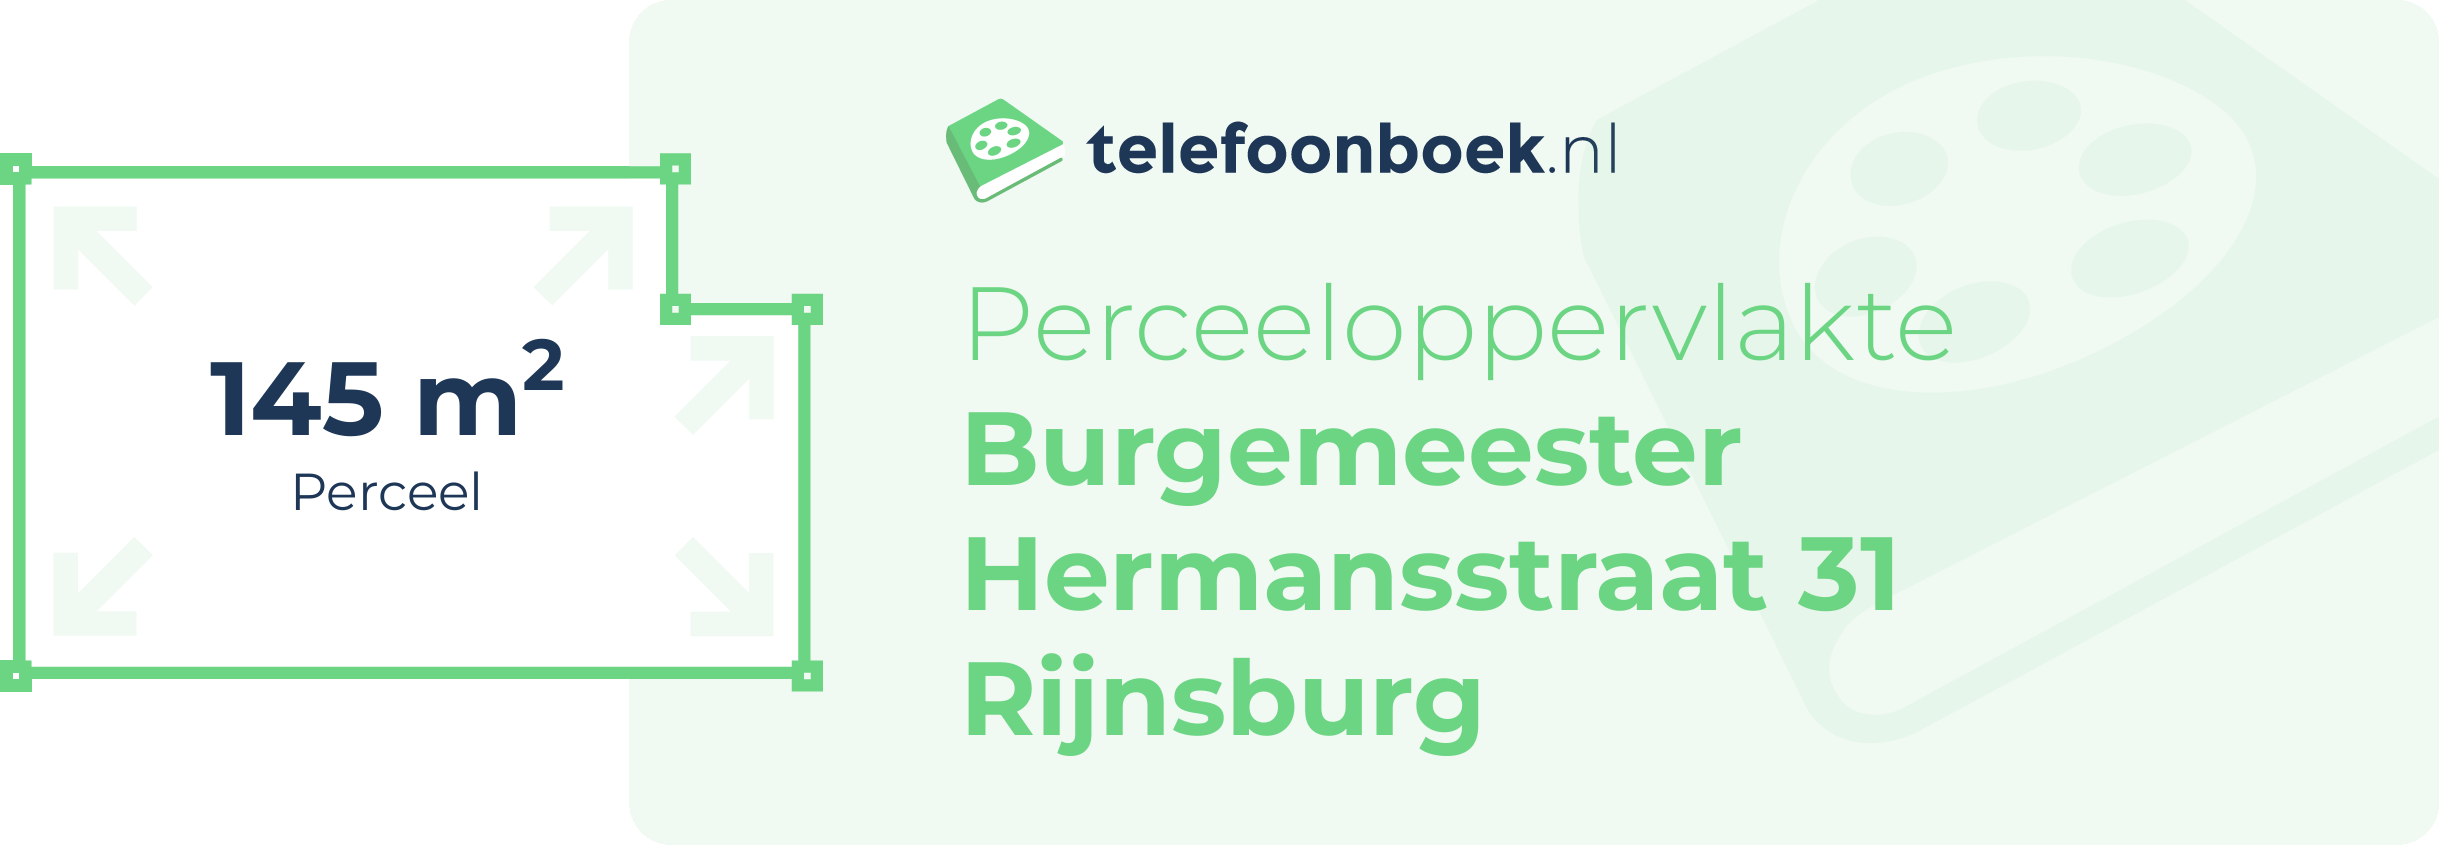 Perceeloppervlakte Burgemeester Hermansstraat 31 Rijnsburg